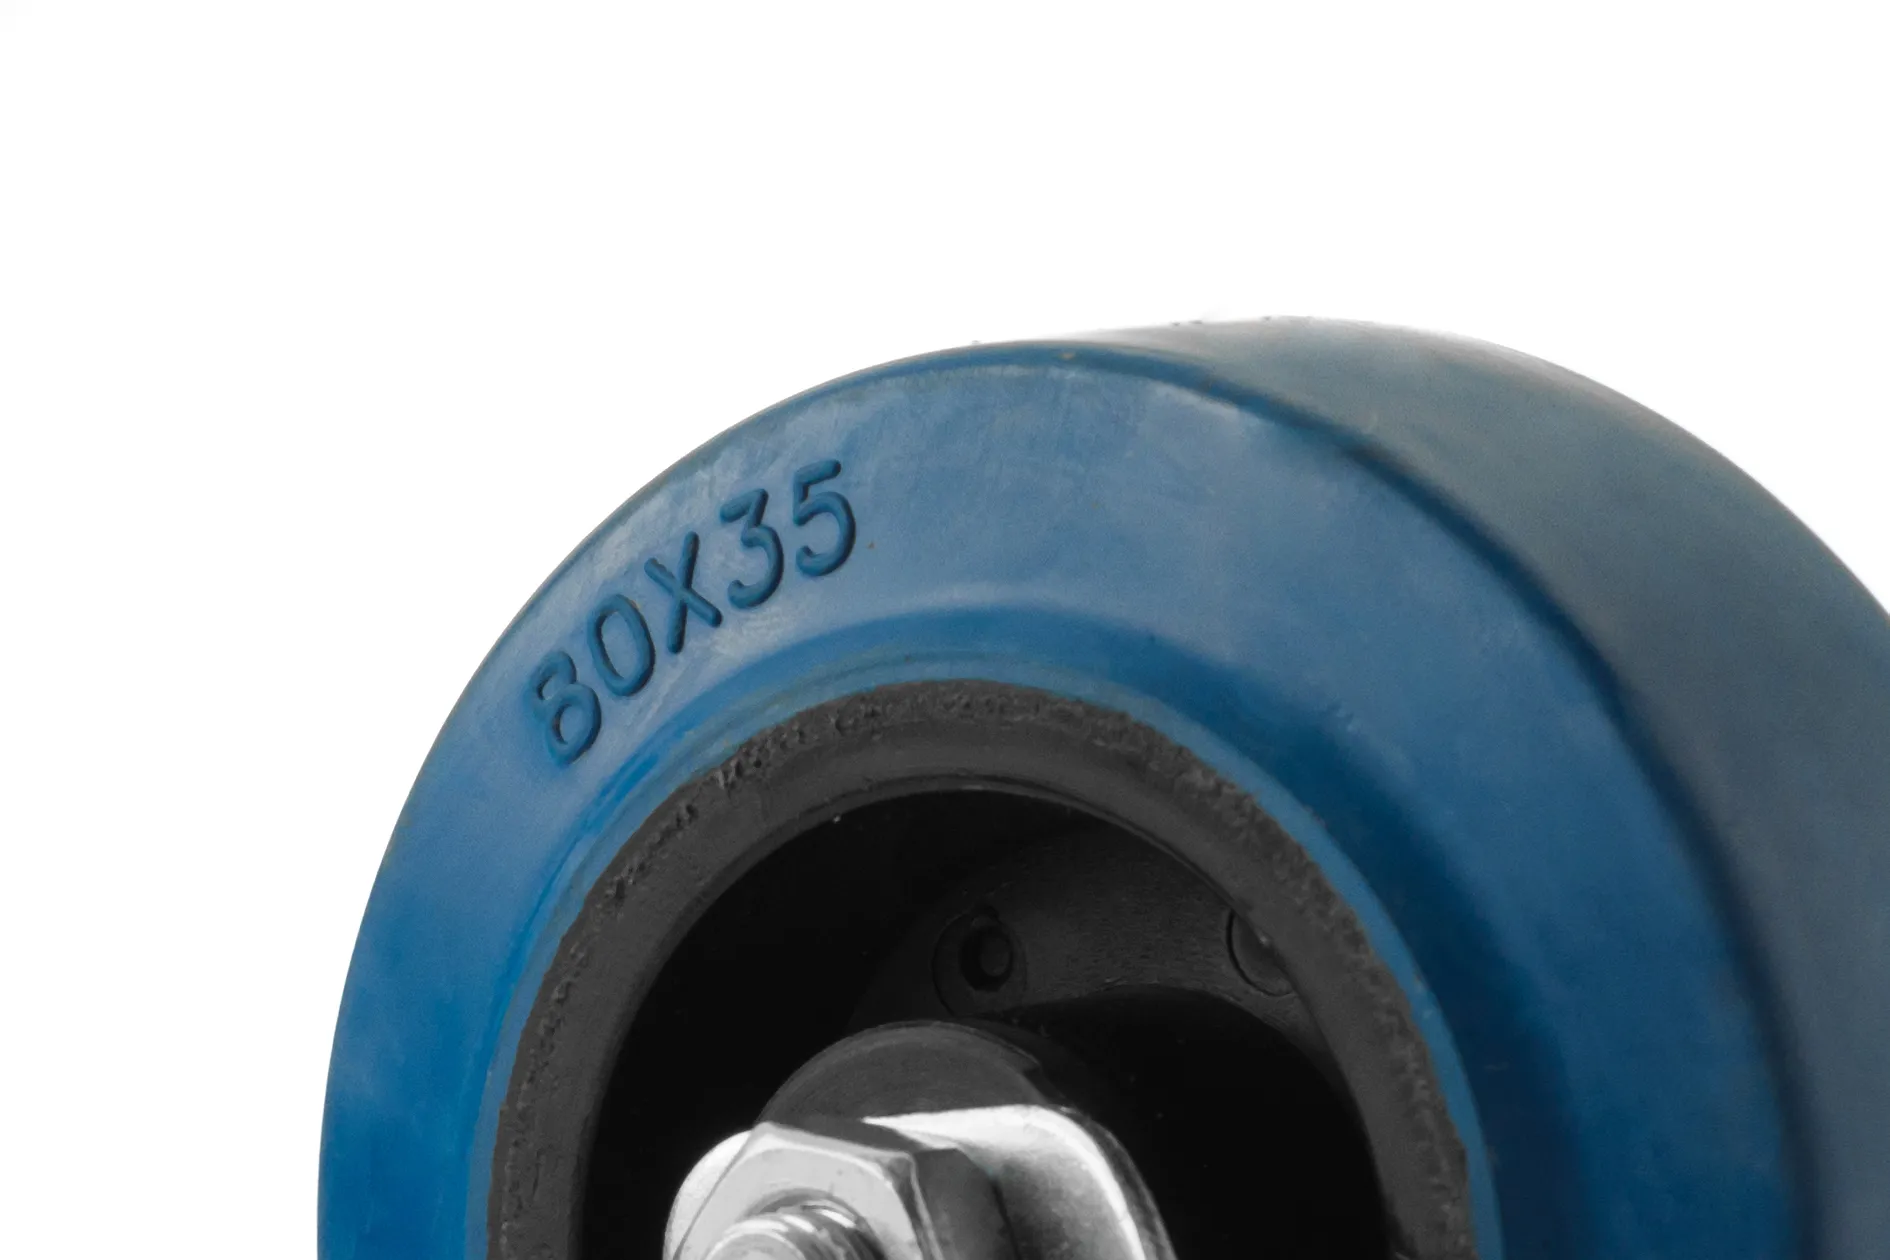 Колесо поворотное, платформенное крепление, синяя резина, диаметр 80мм - SCL 93